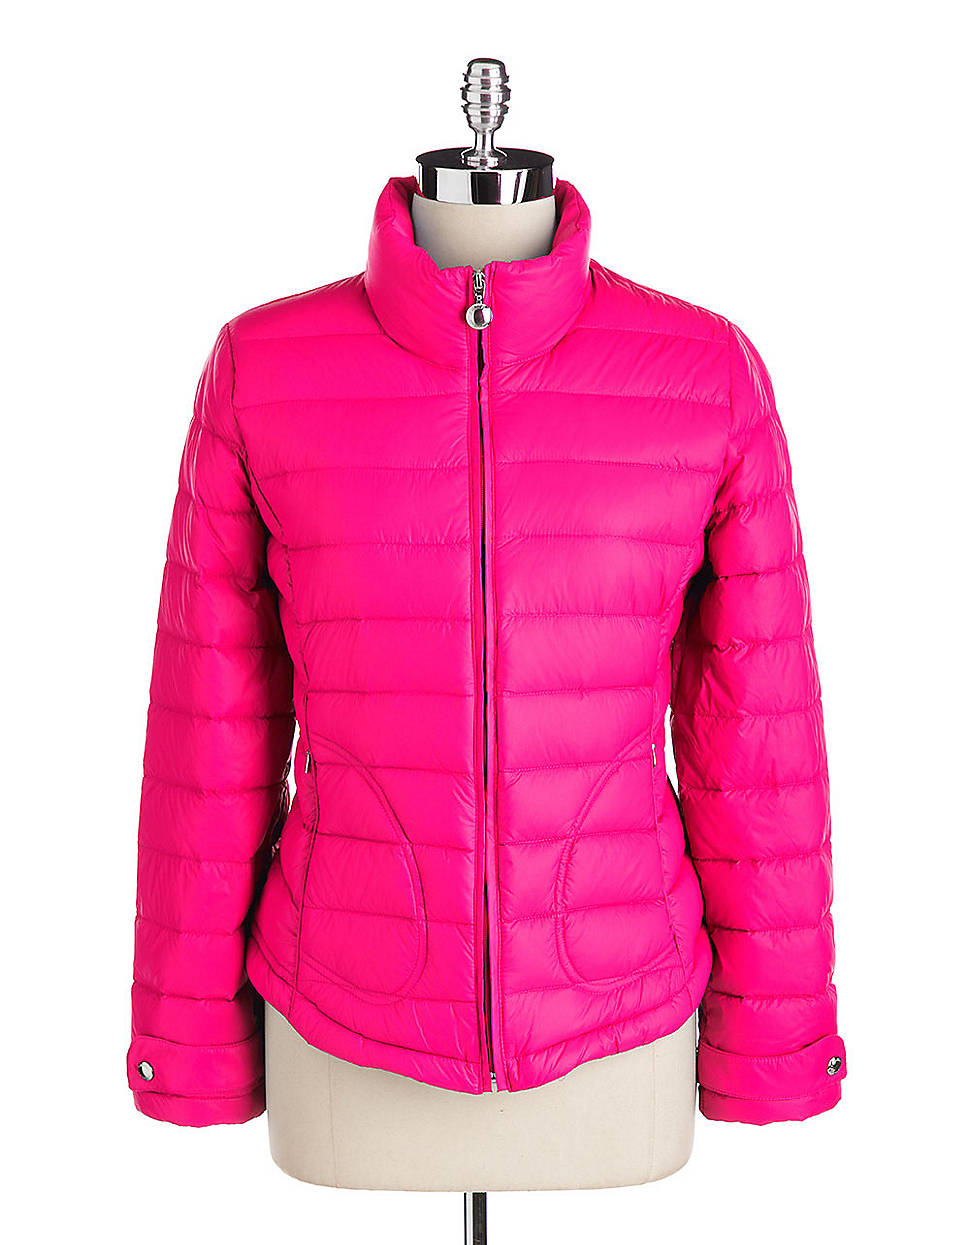 Calvin Klein Lightweight Packable Jacket in Pink - Lyst